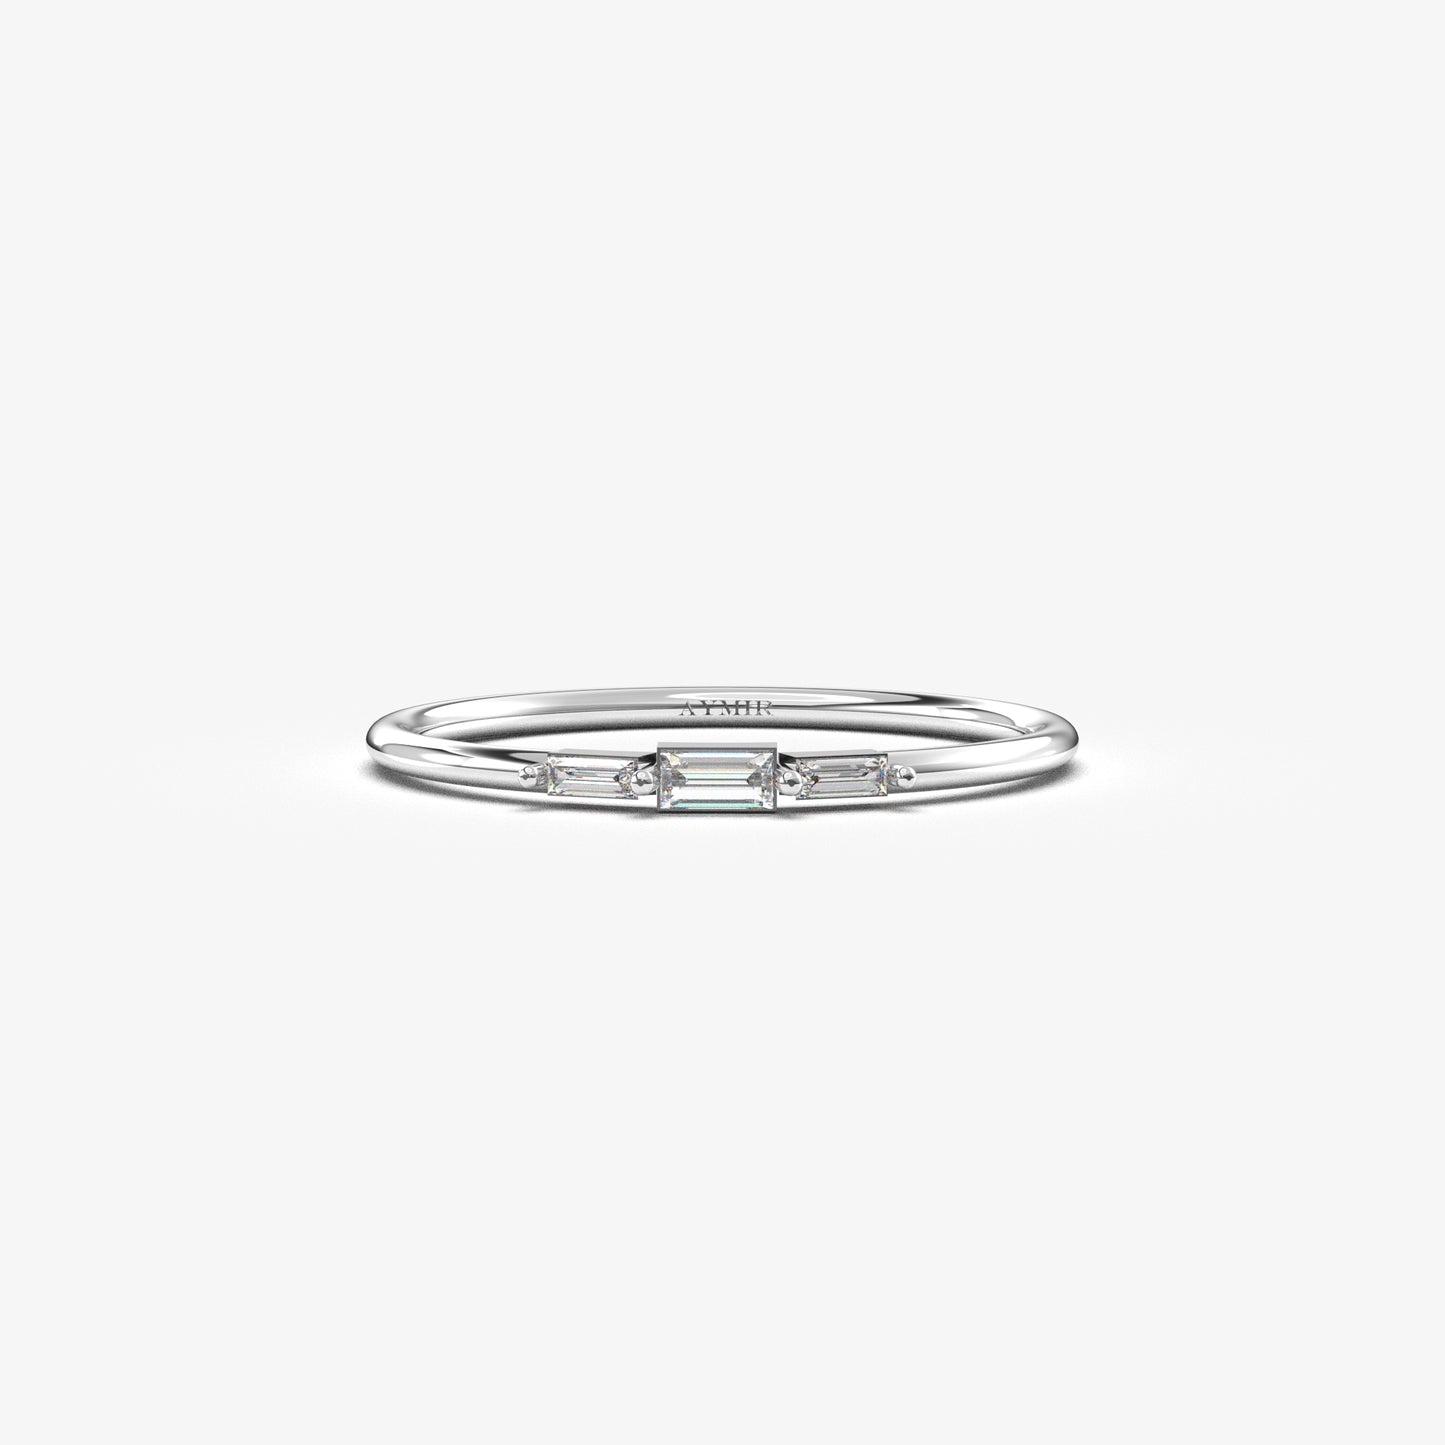 10K Gold Mini Baguette Diamond Ring - 2S159